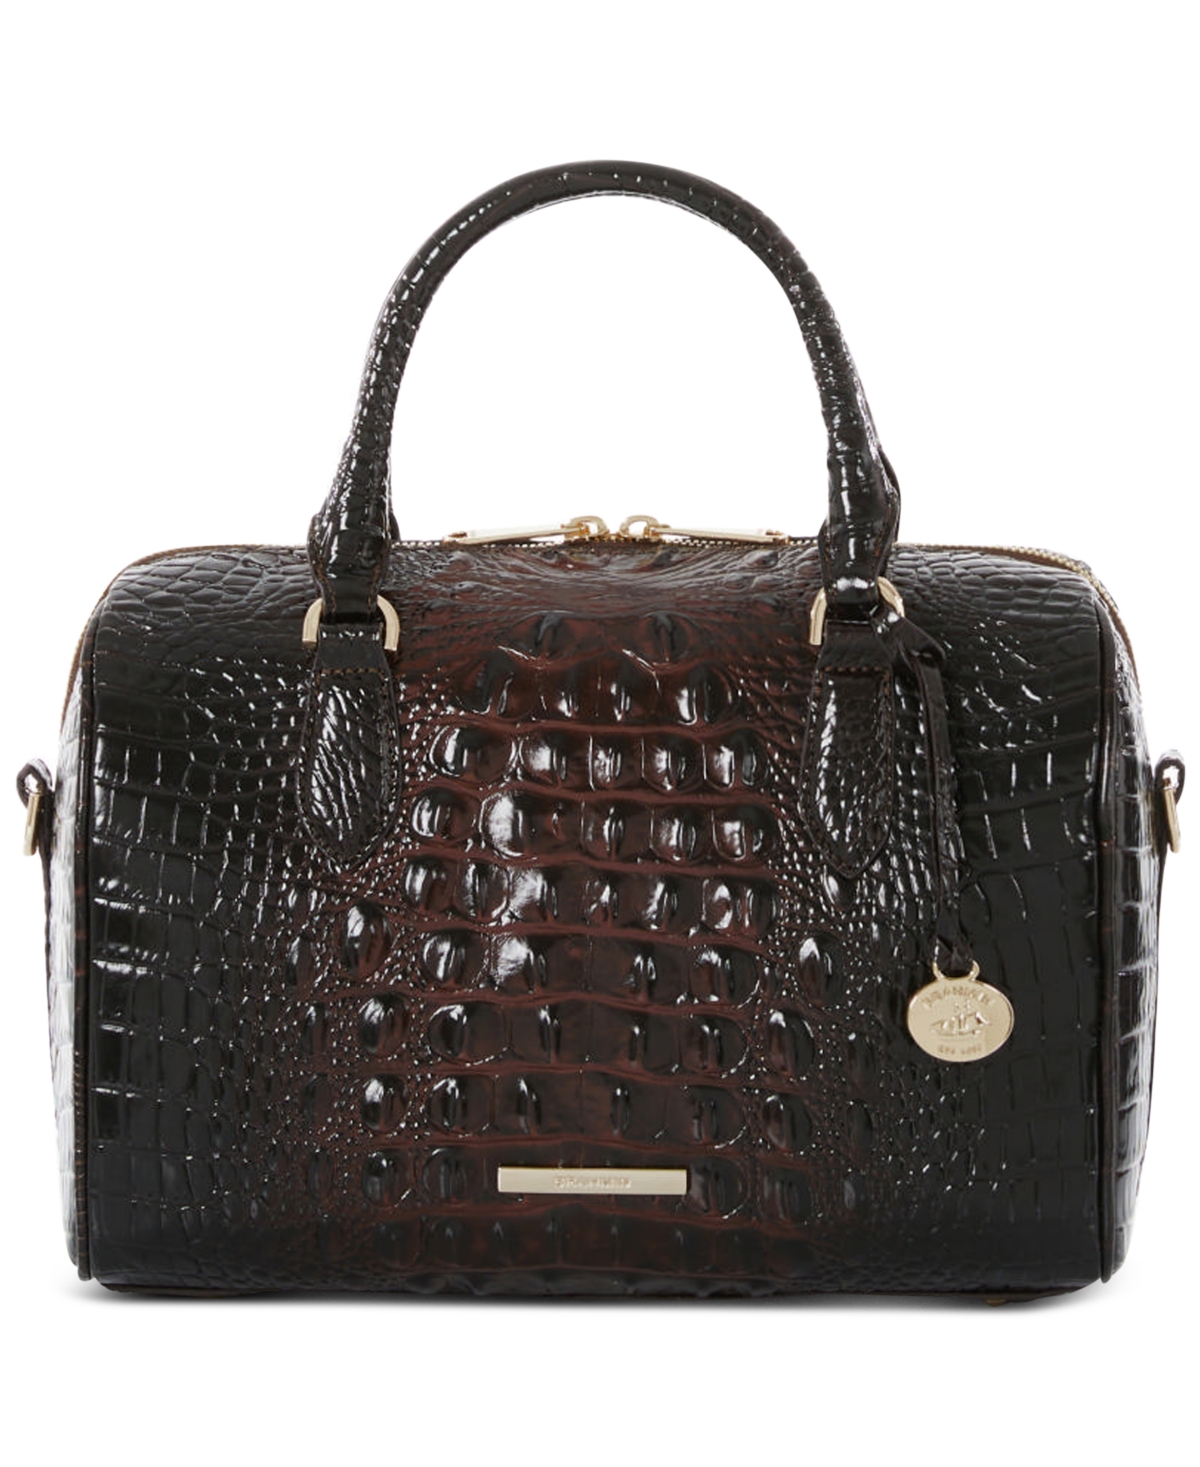 Ivory Satchel Handbag